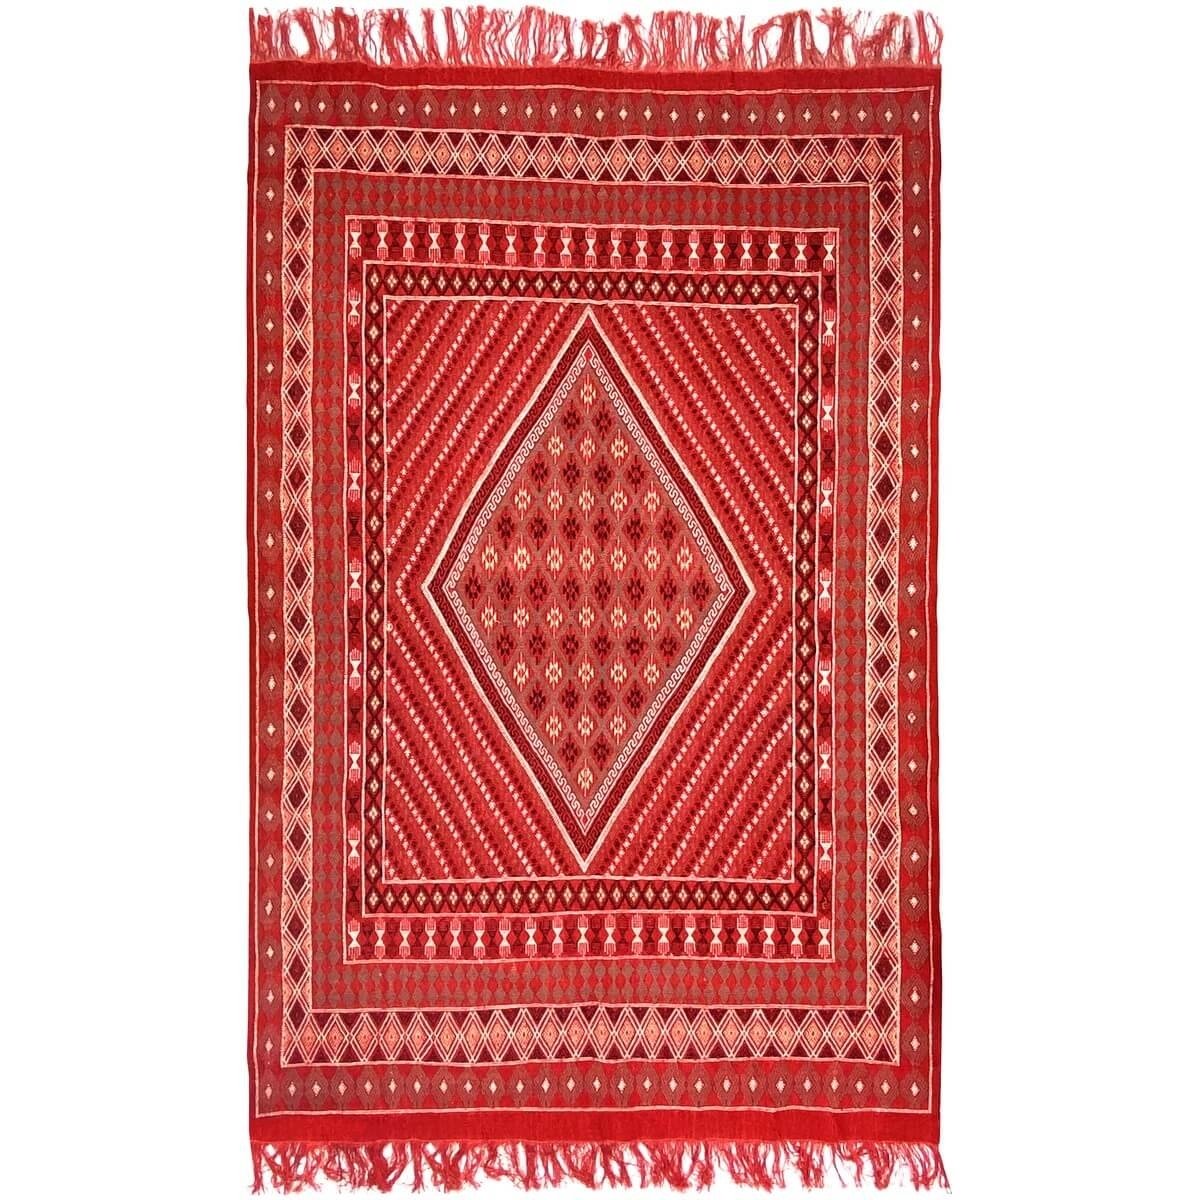 Berber carpet Rug Margoum Delaali 195x308 cm Red (Handmade, Wool) Tunisian margoum rug from the city of Kairouan. Rectangular li